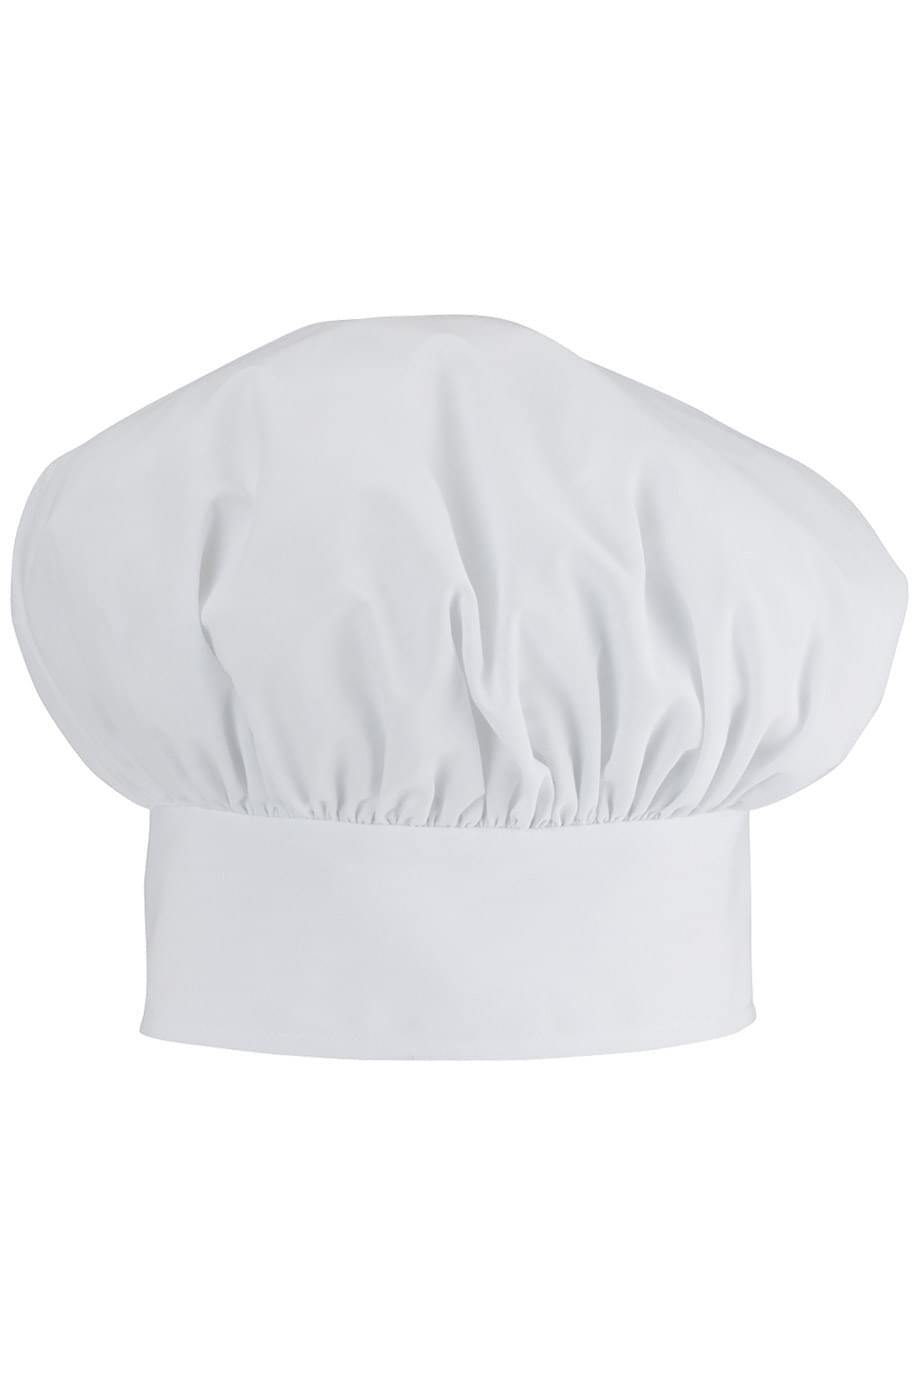 Poplin Chef Hat. HT00